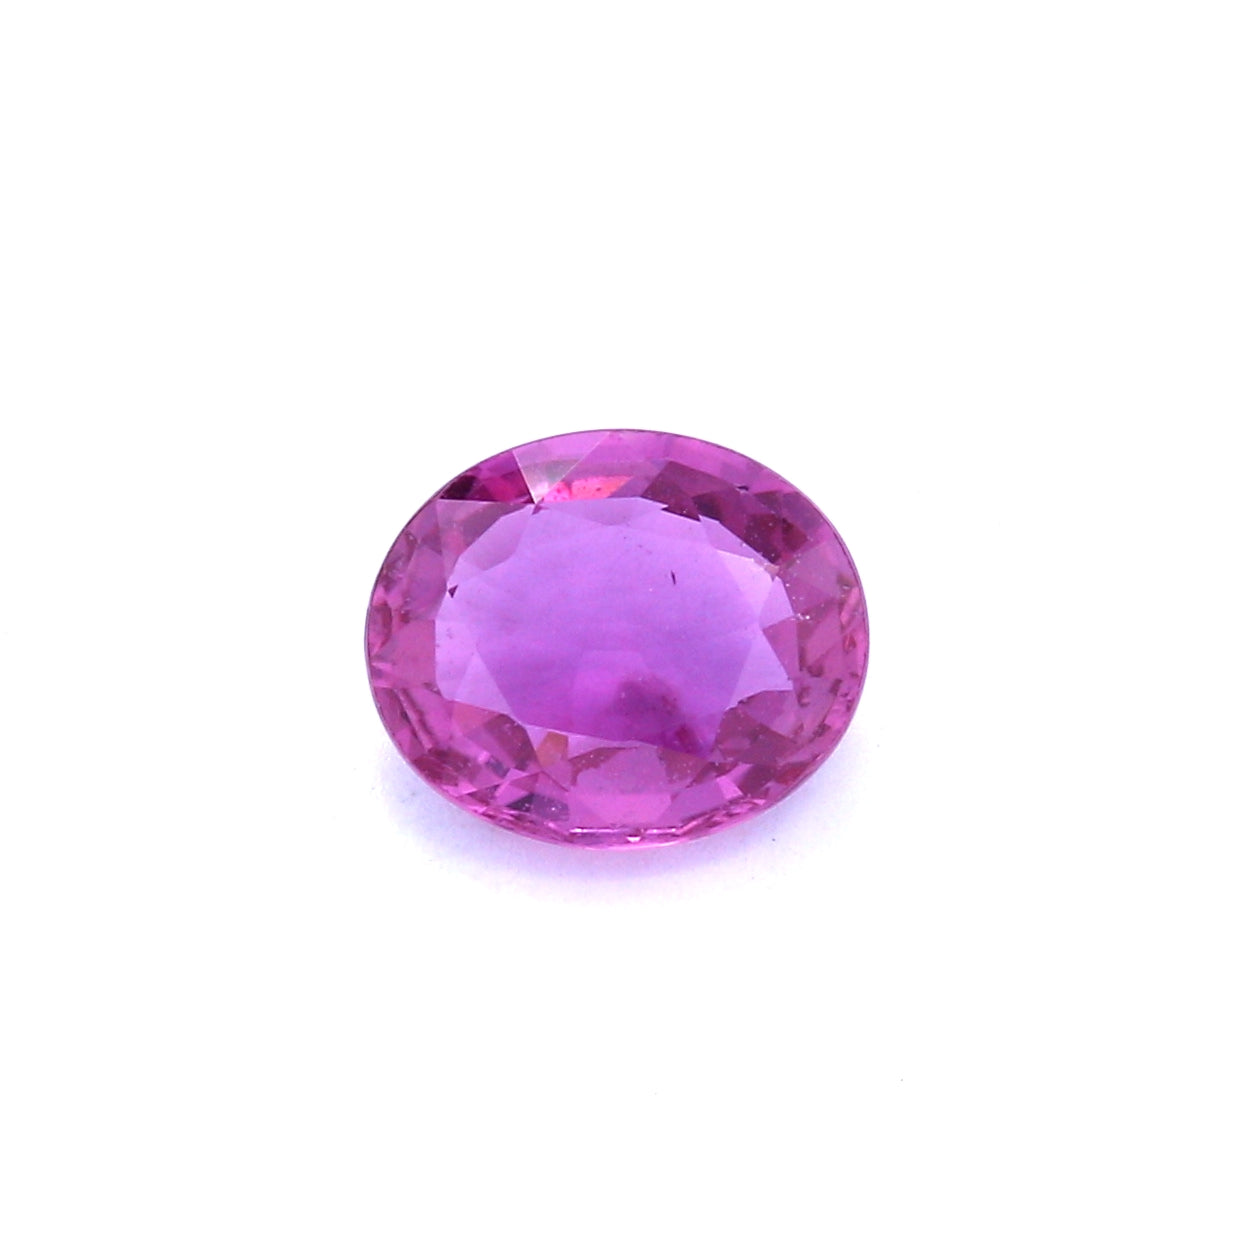 2.12ct Pinkish Purple, Oval Sapphire, Heated, Madagascar - 8.83 x 7.38 x 3.44mm